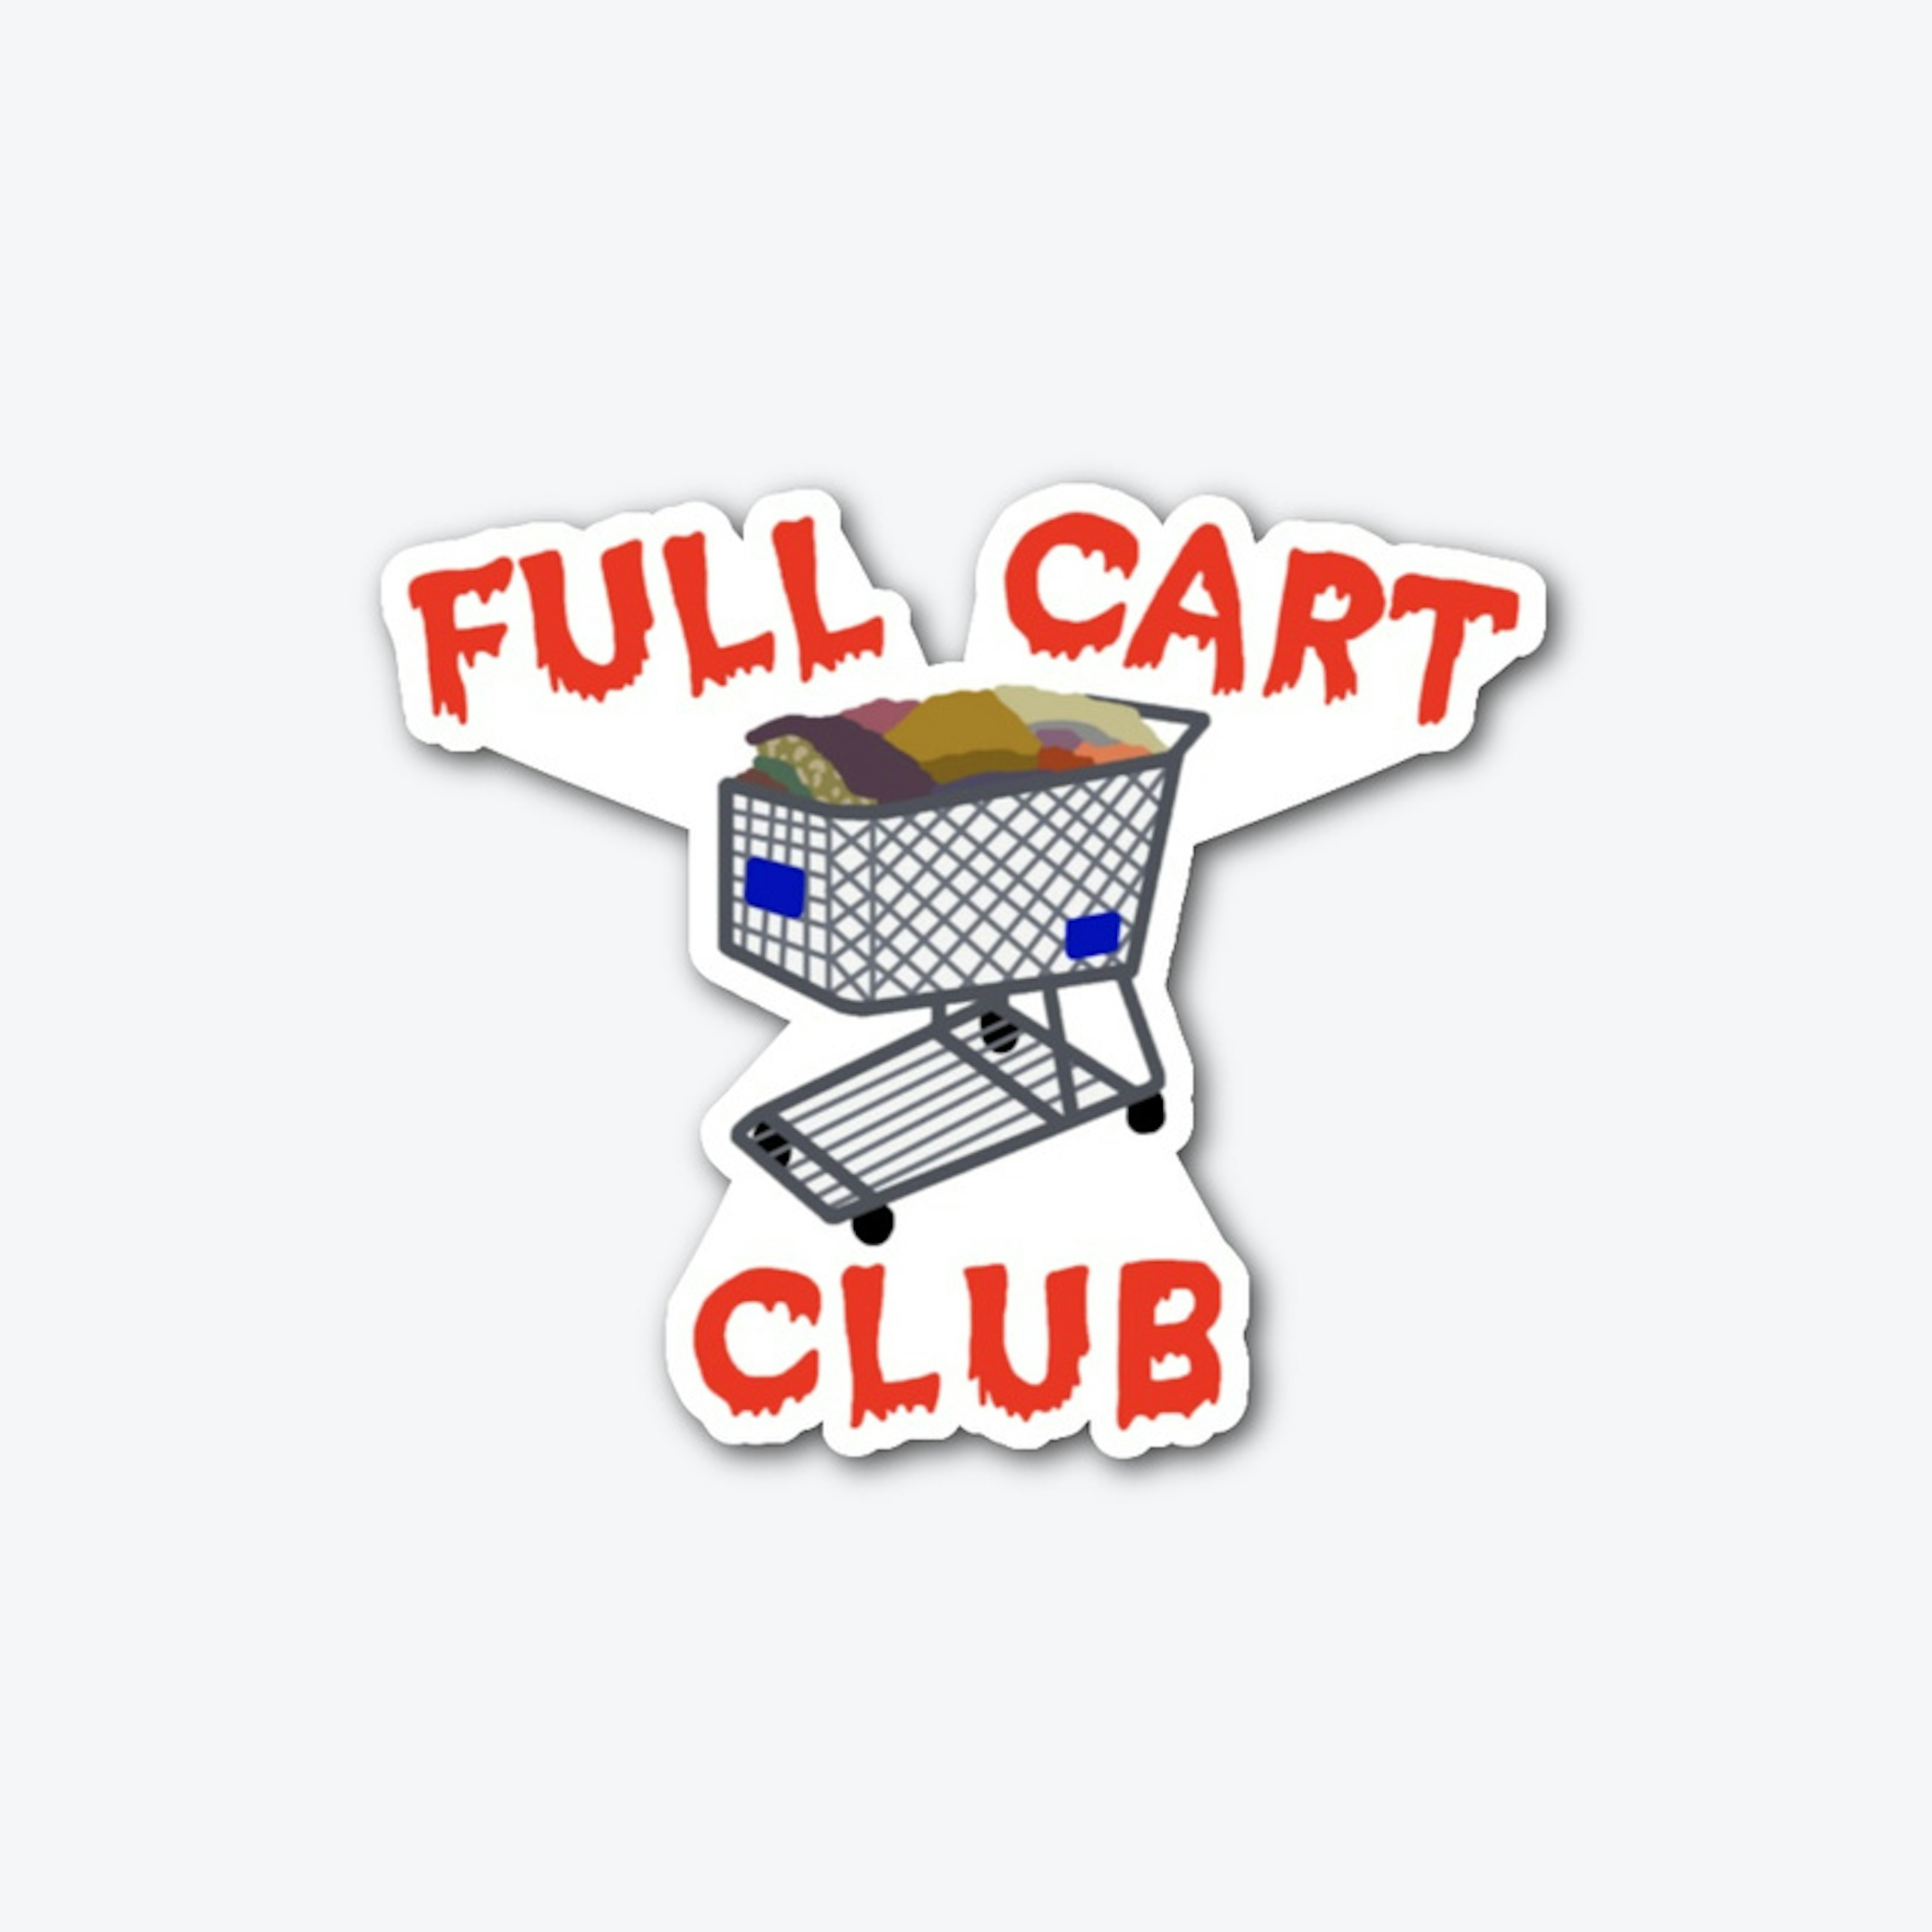 Fall Cart Club Illustration